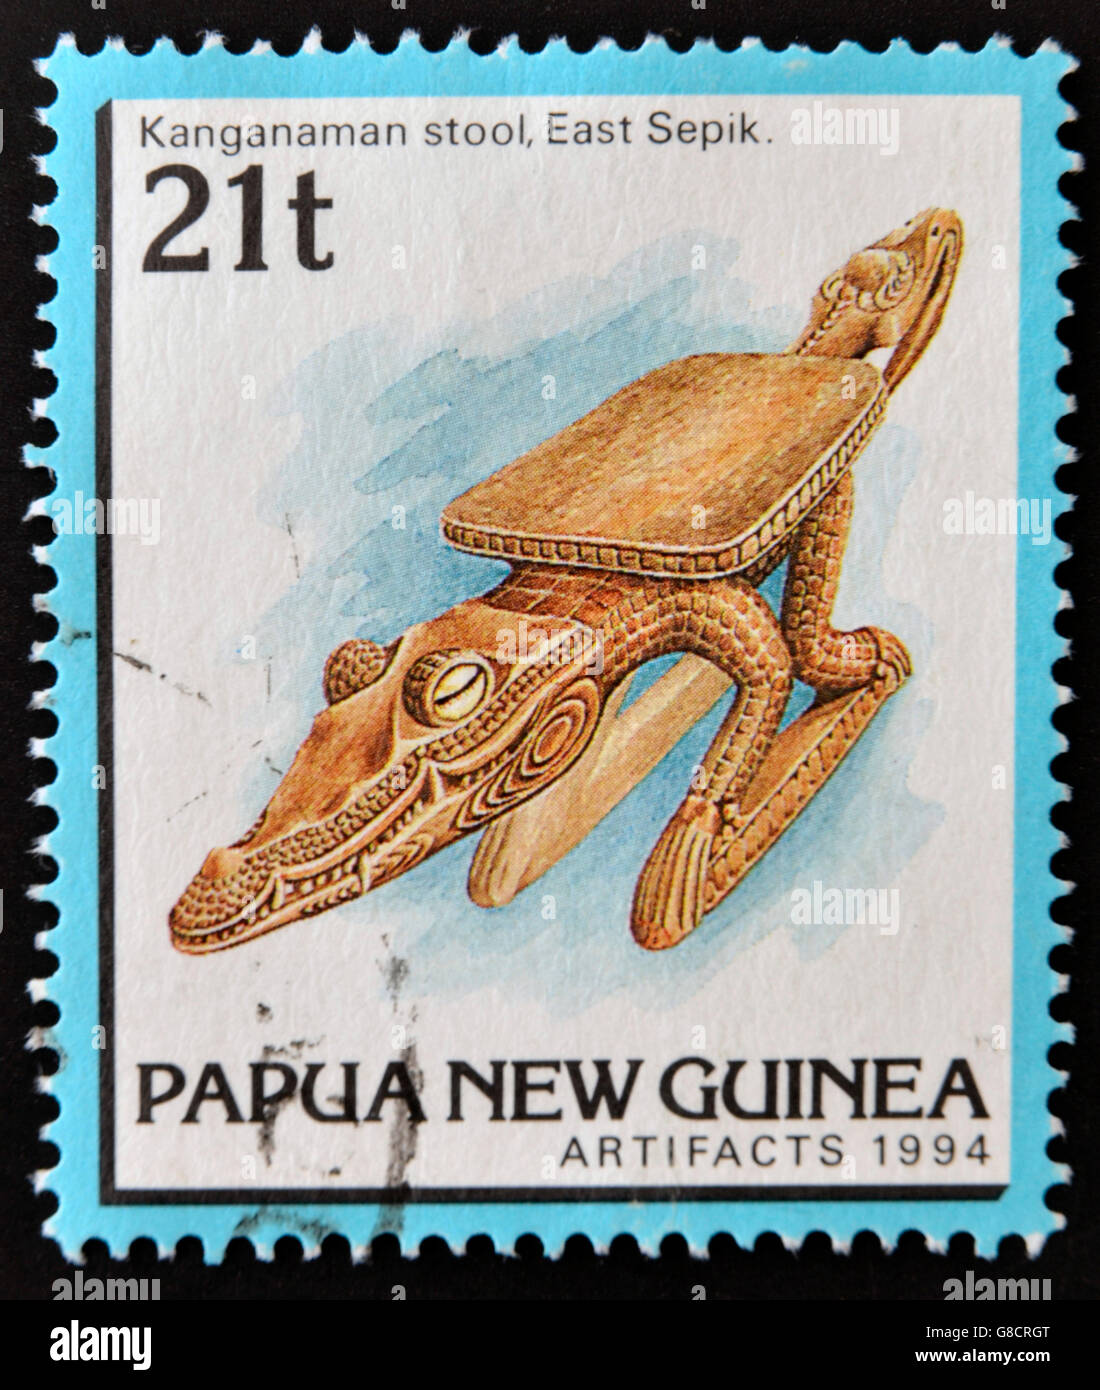 PAPUA NEW GUINEA - CIRCA 1994: A stamp printed in Papua shows Kanganaman stool, east spik, circa 1994 Stock Photo